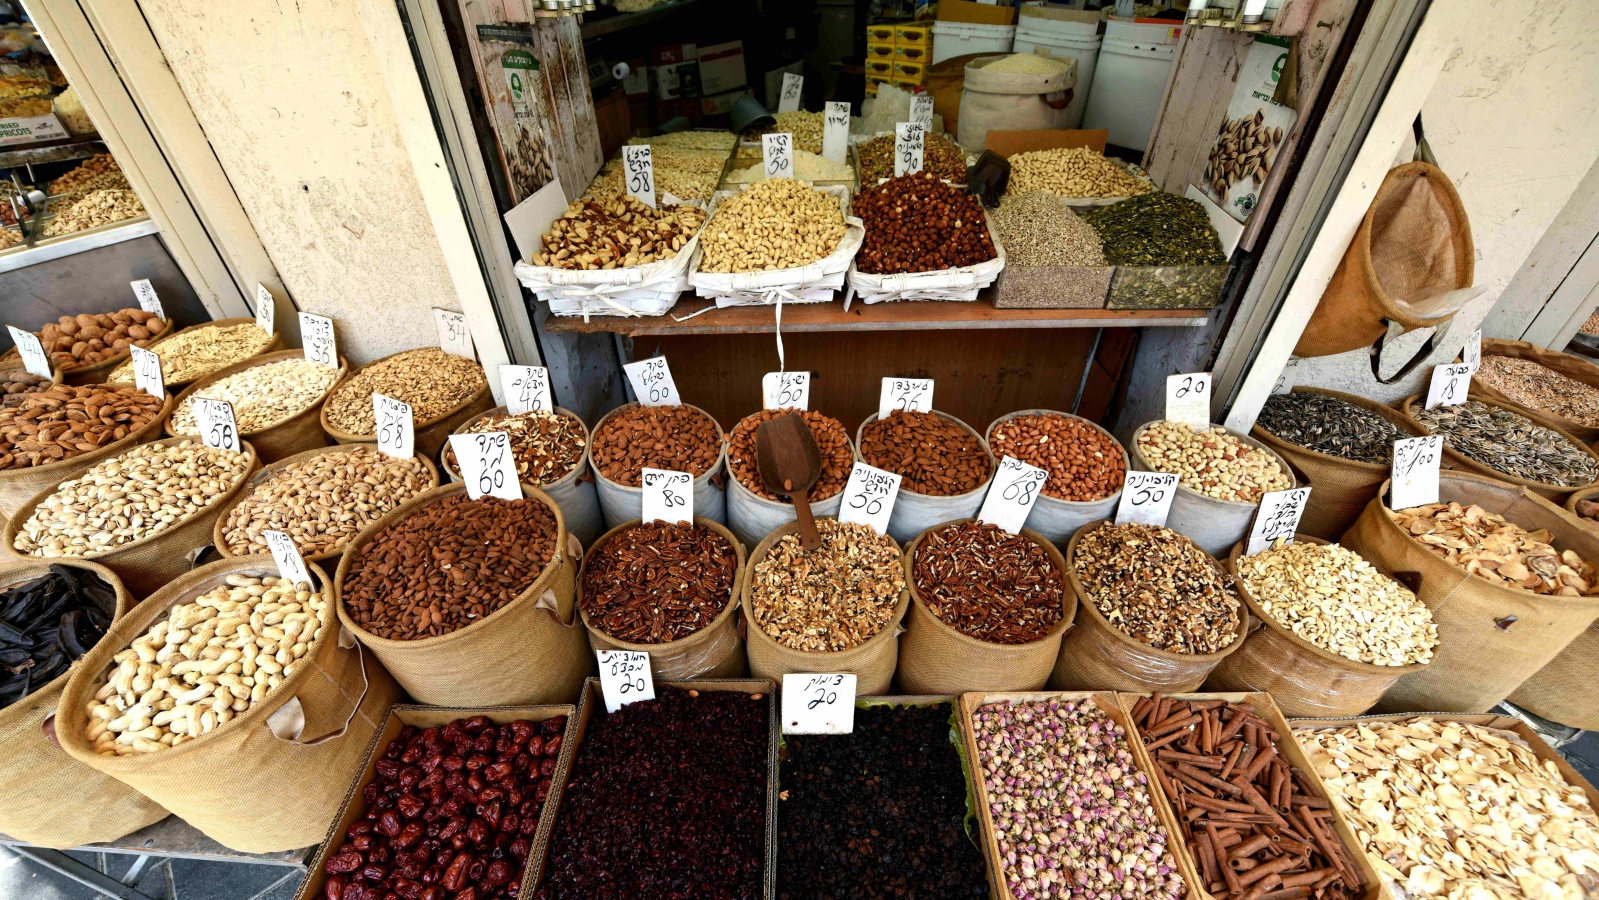 Spices on sale at Levinsky Market, Tel Aviv. Photo by Mario Troiani via Shutterstock.com